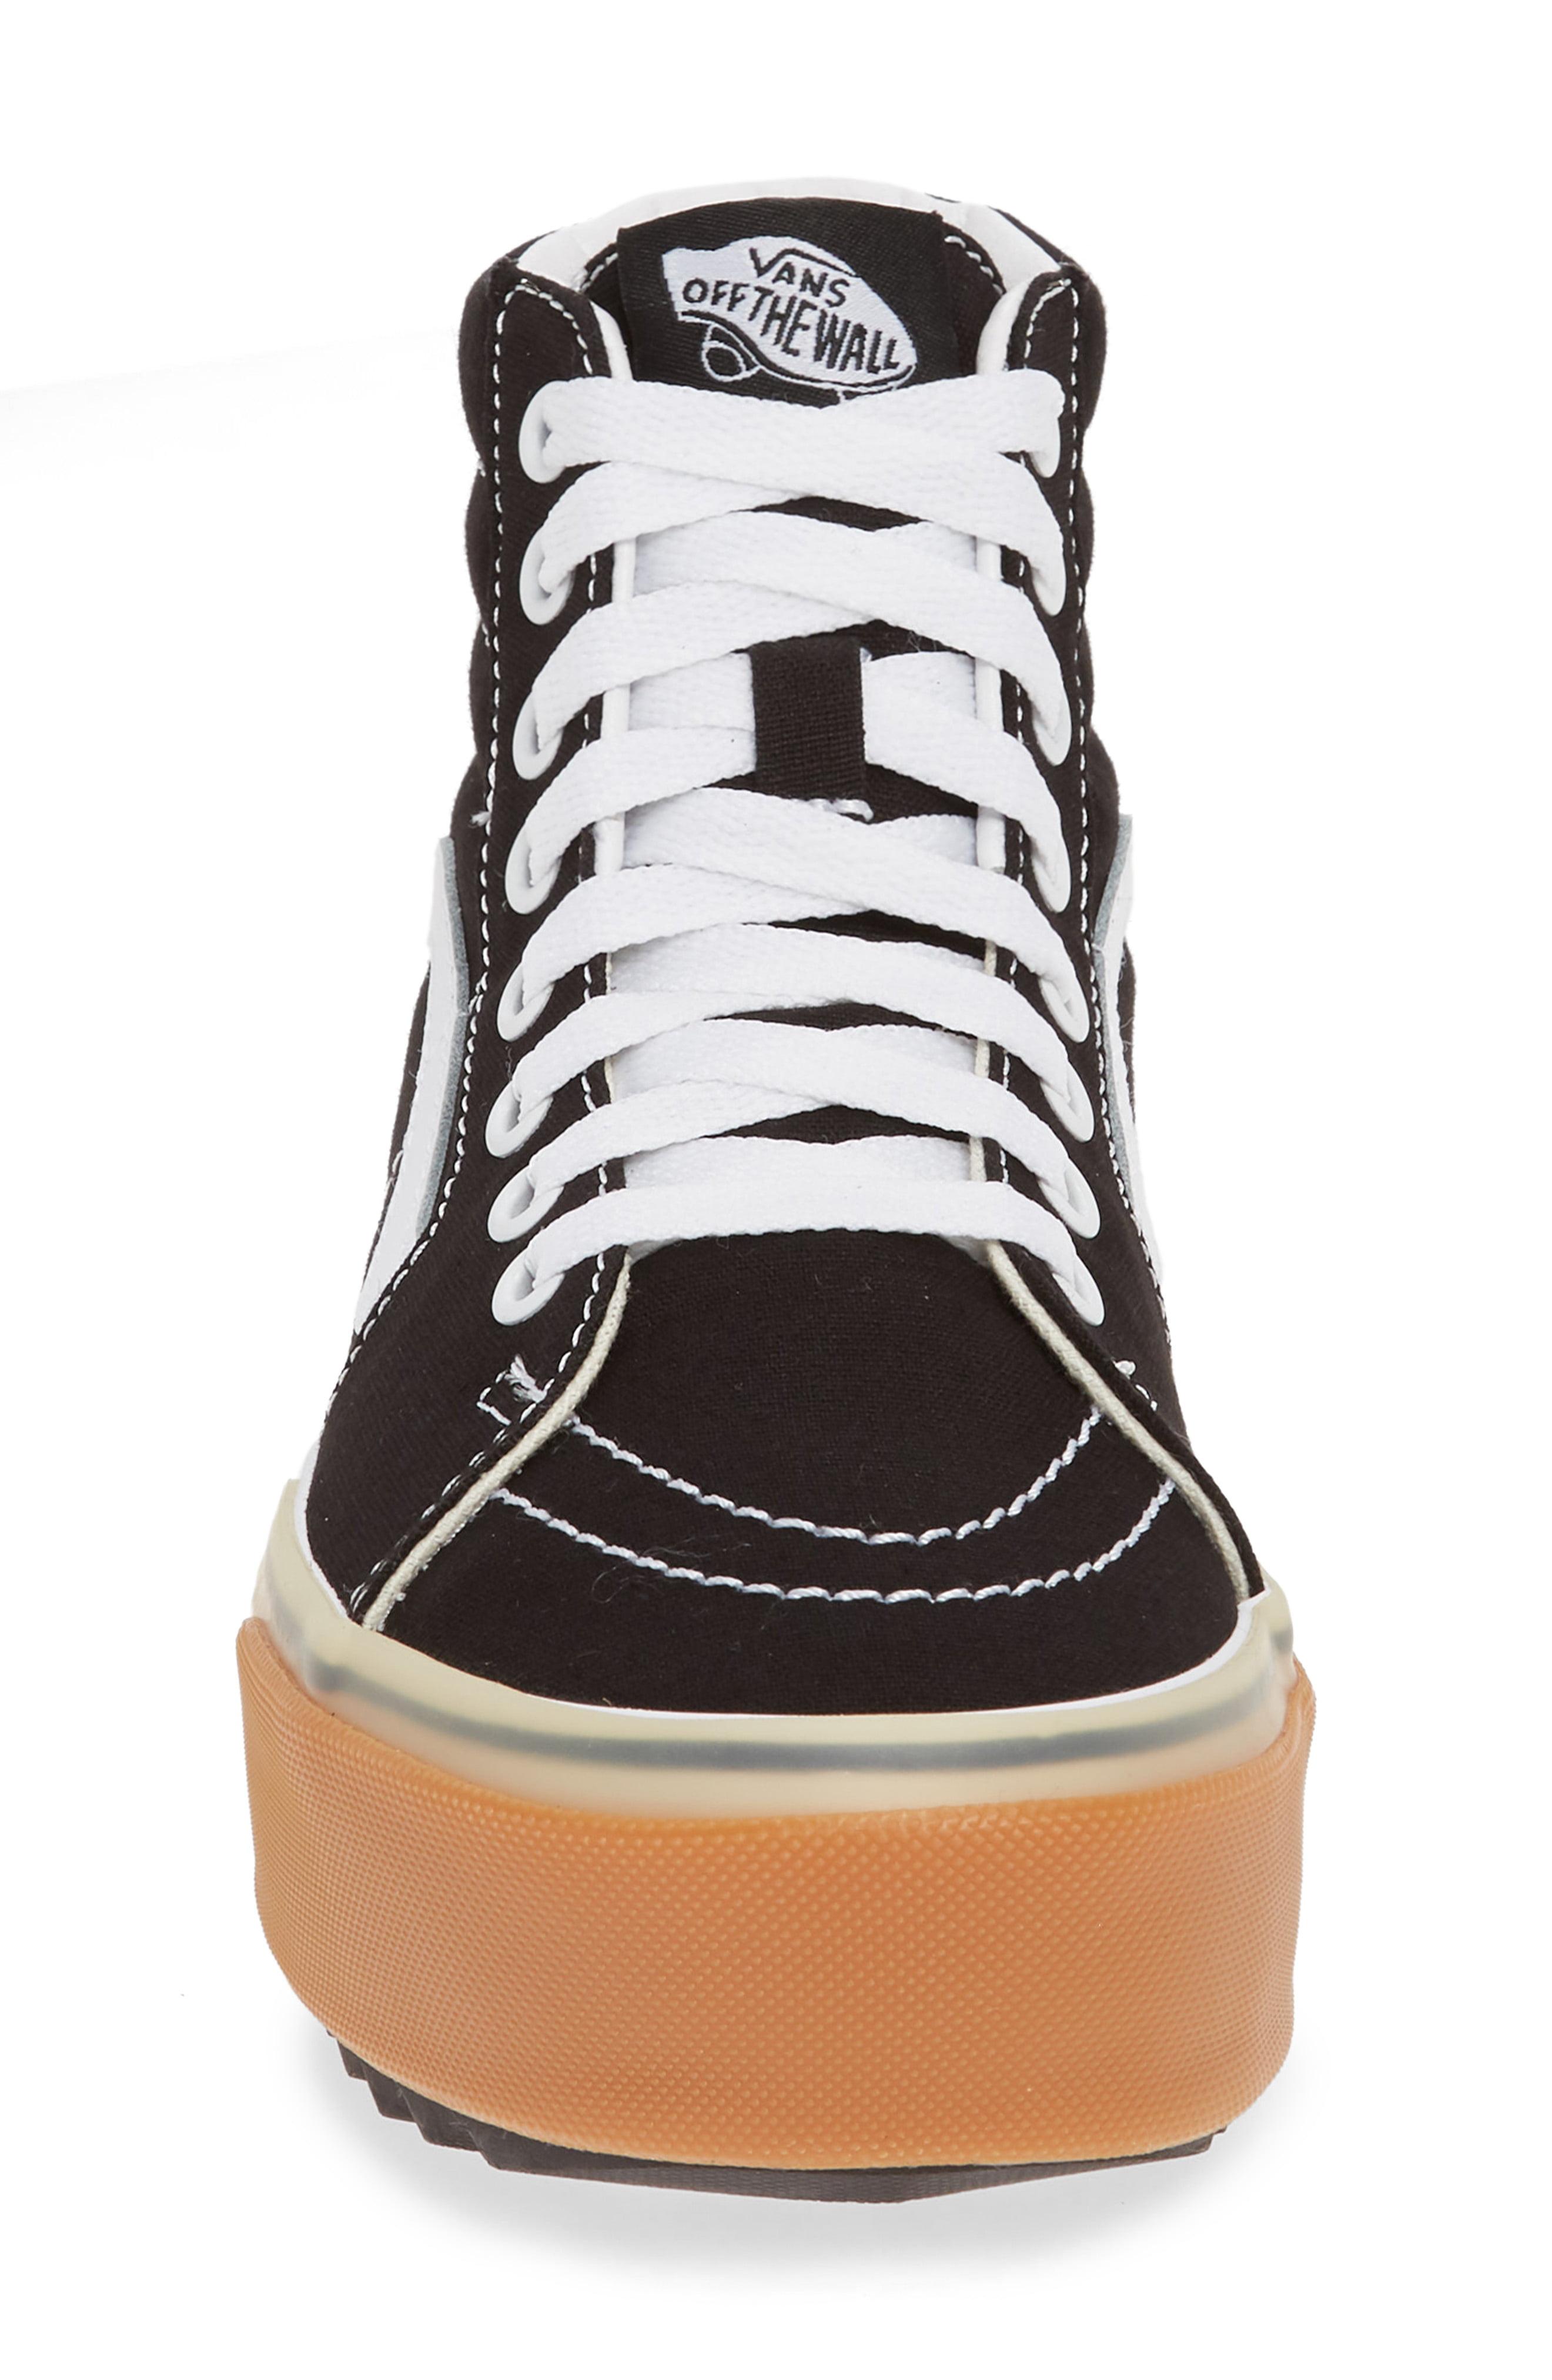 Vans Sk8-hi Stacked Check Platform High Top Sneaker in Black | Lyst